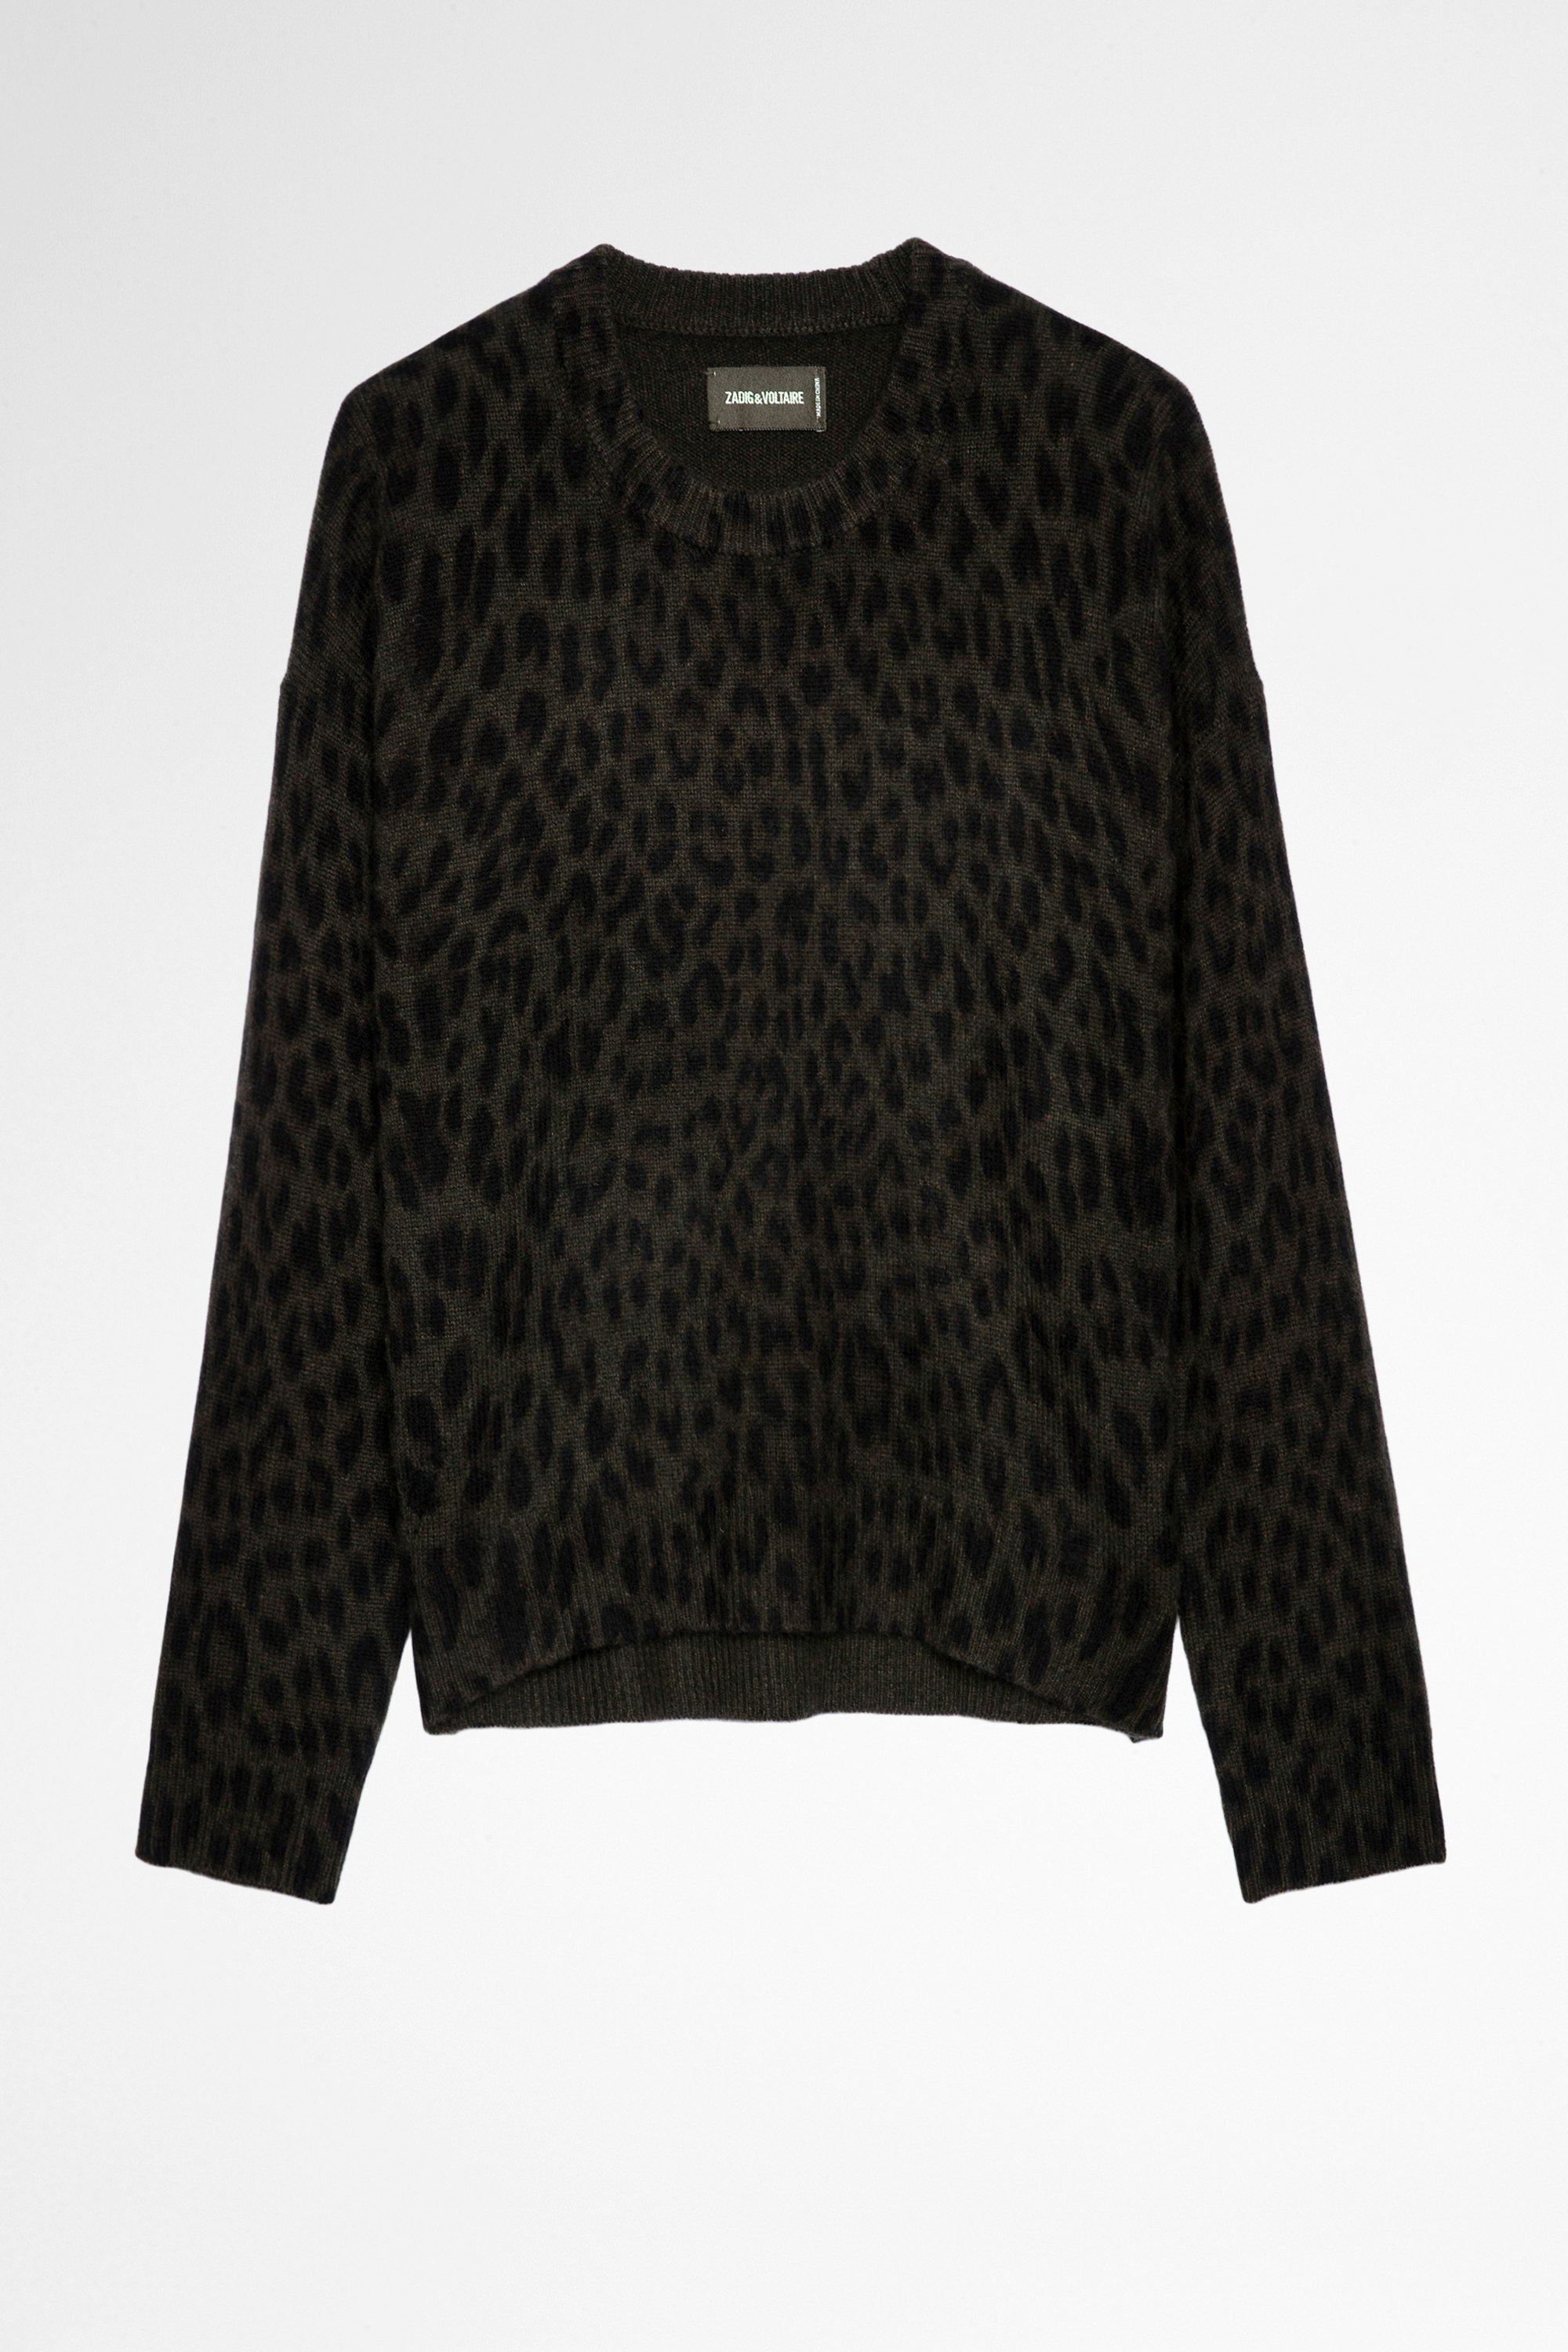 Markus Leo Sweater Cashmere Women’s khaki cashmere sweater with leopard print